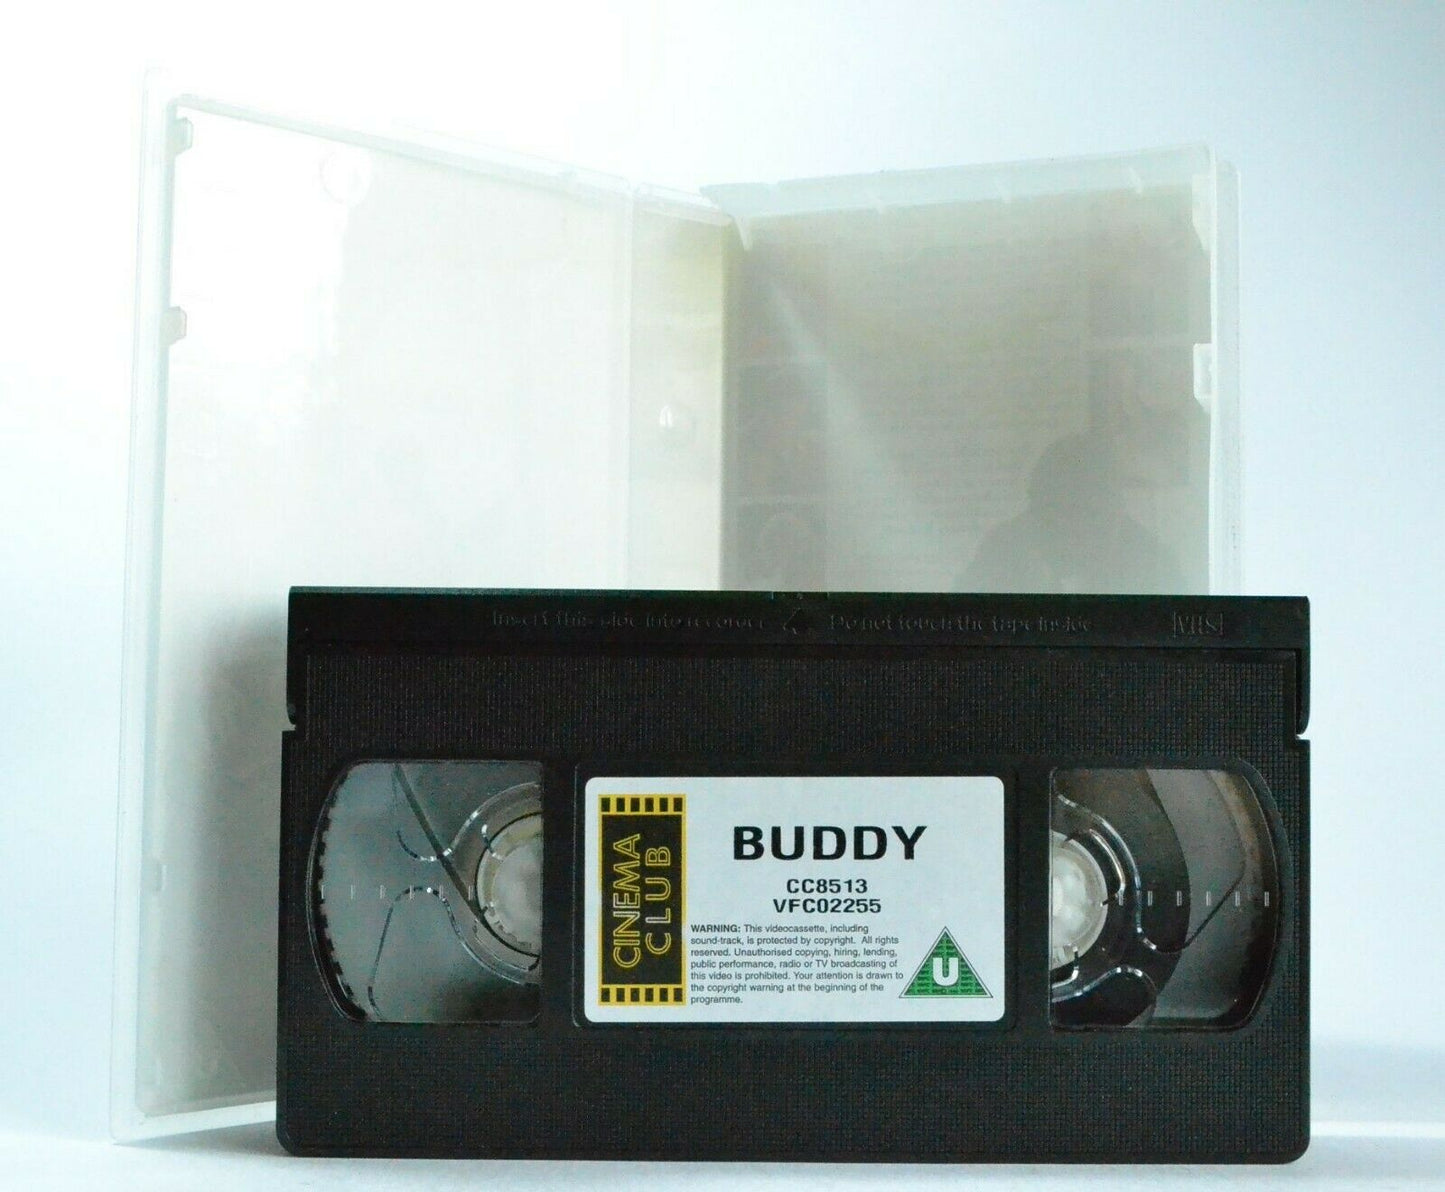 Buddy (1997): Based On True Story - Adventure Drama Comedy - Rene Russo - VHS-